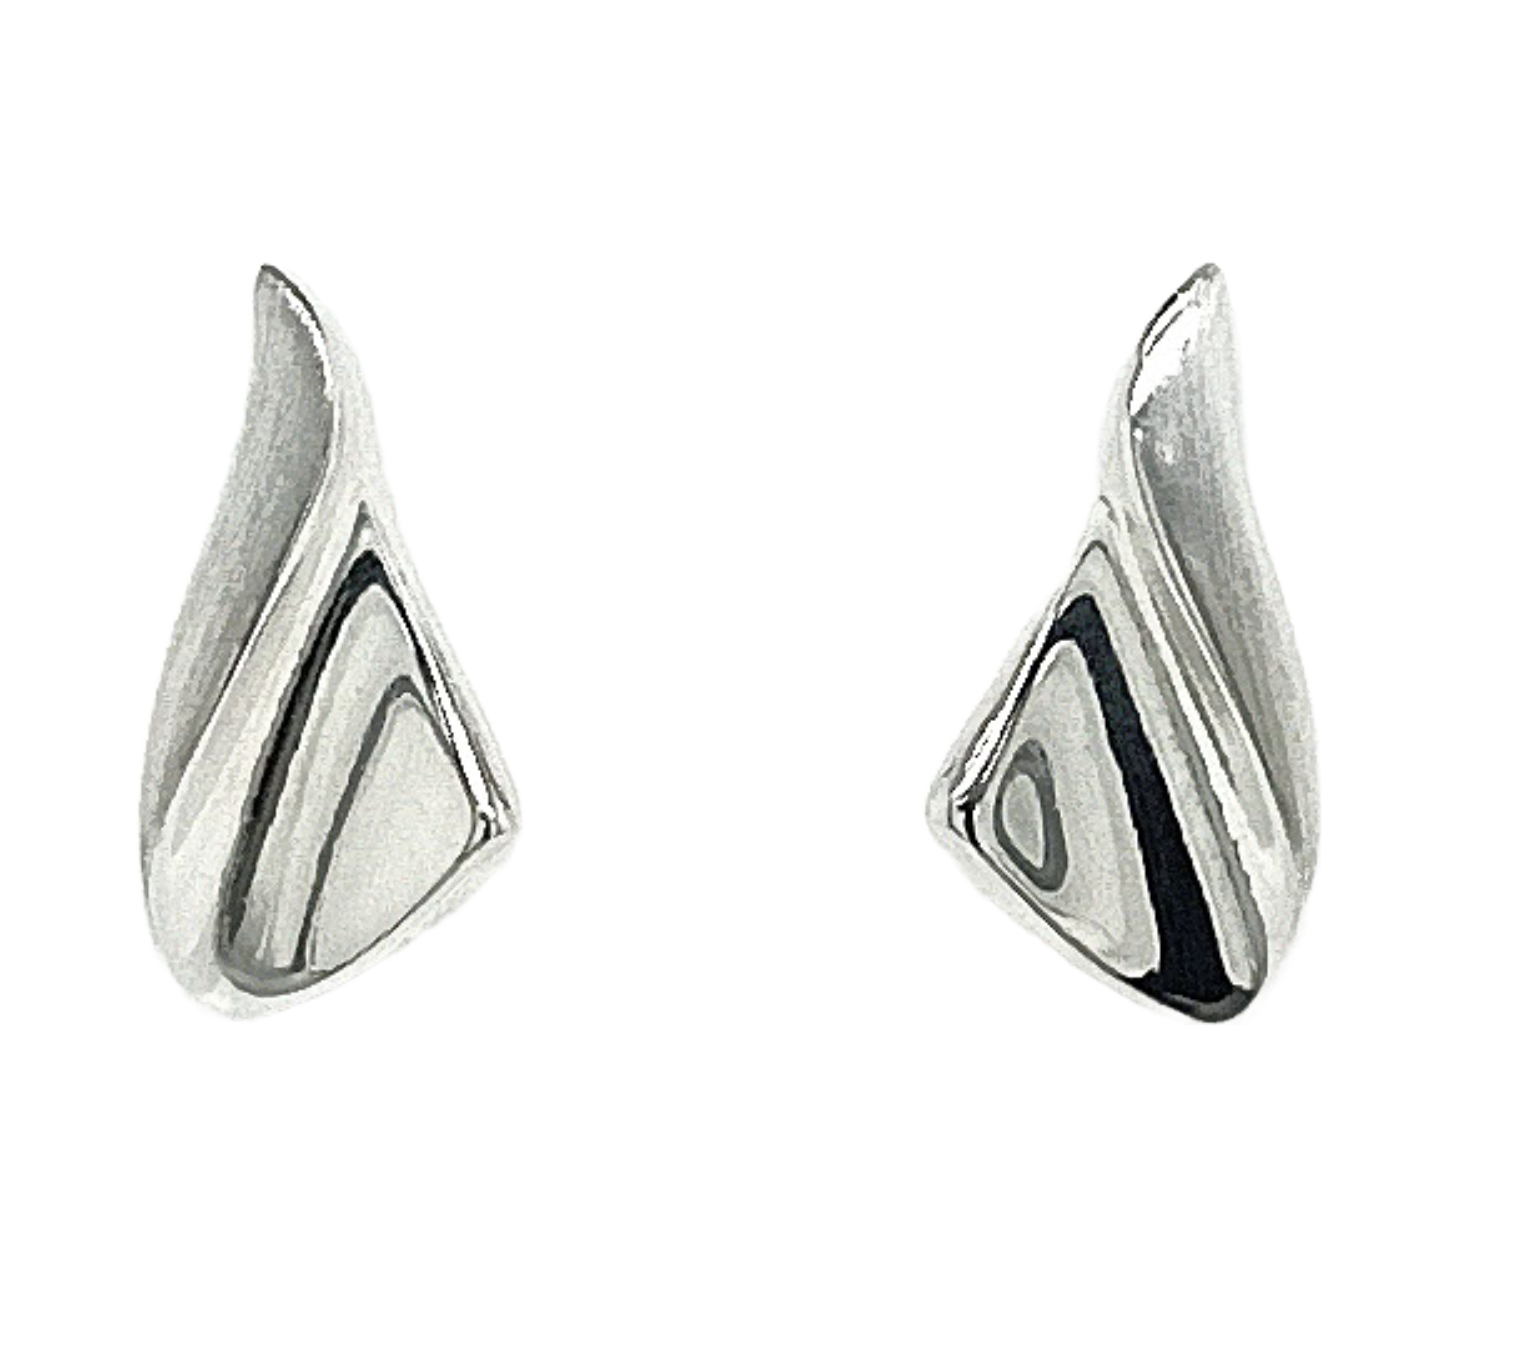 Silver Satin & Polish Curved Triangle Stud Earrings